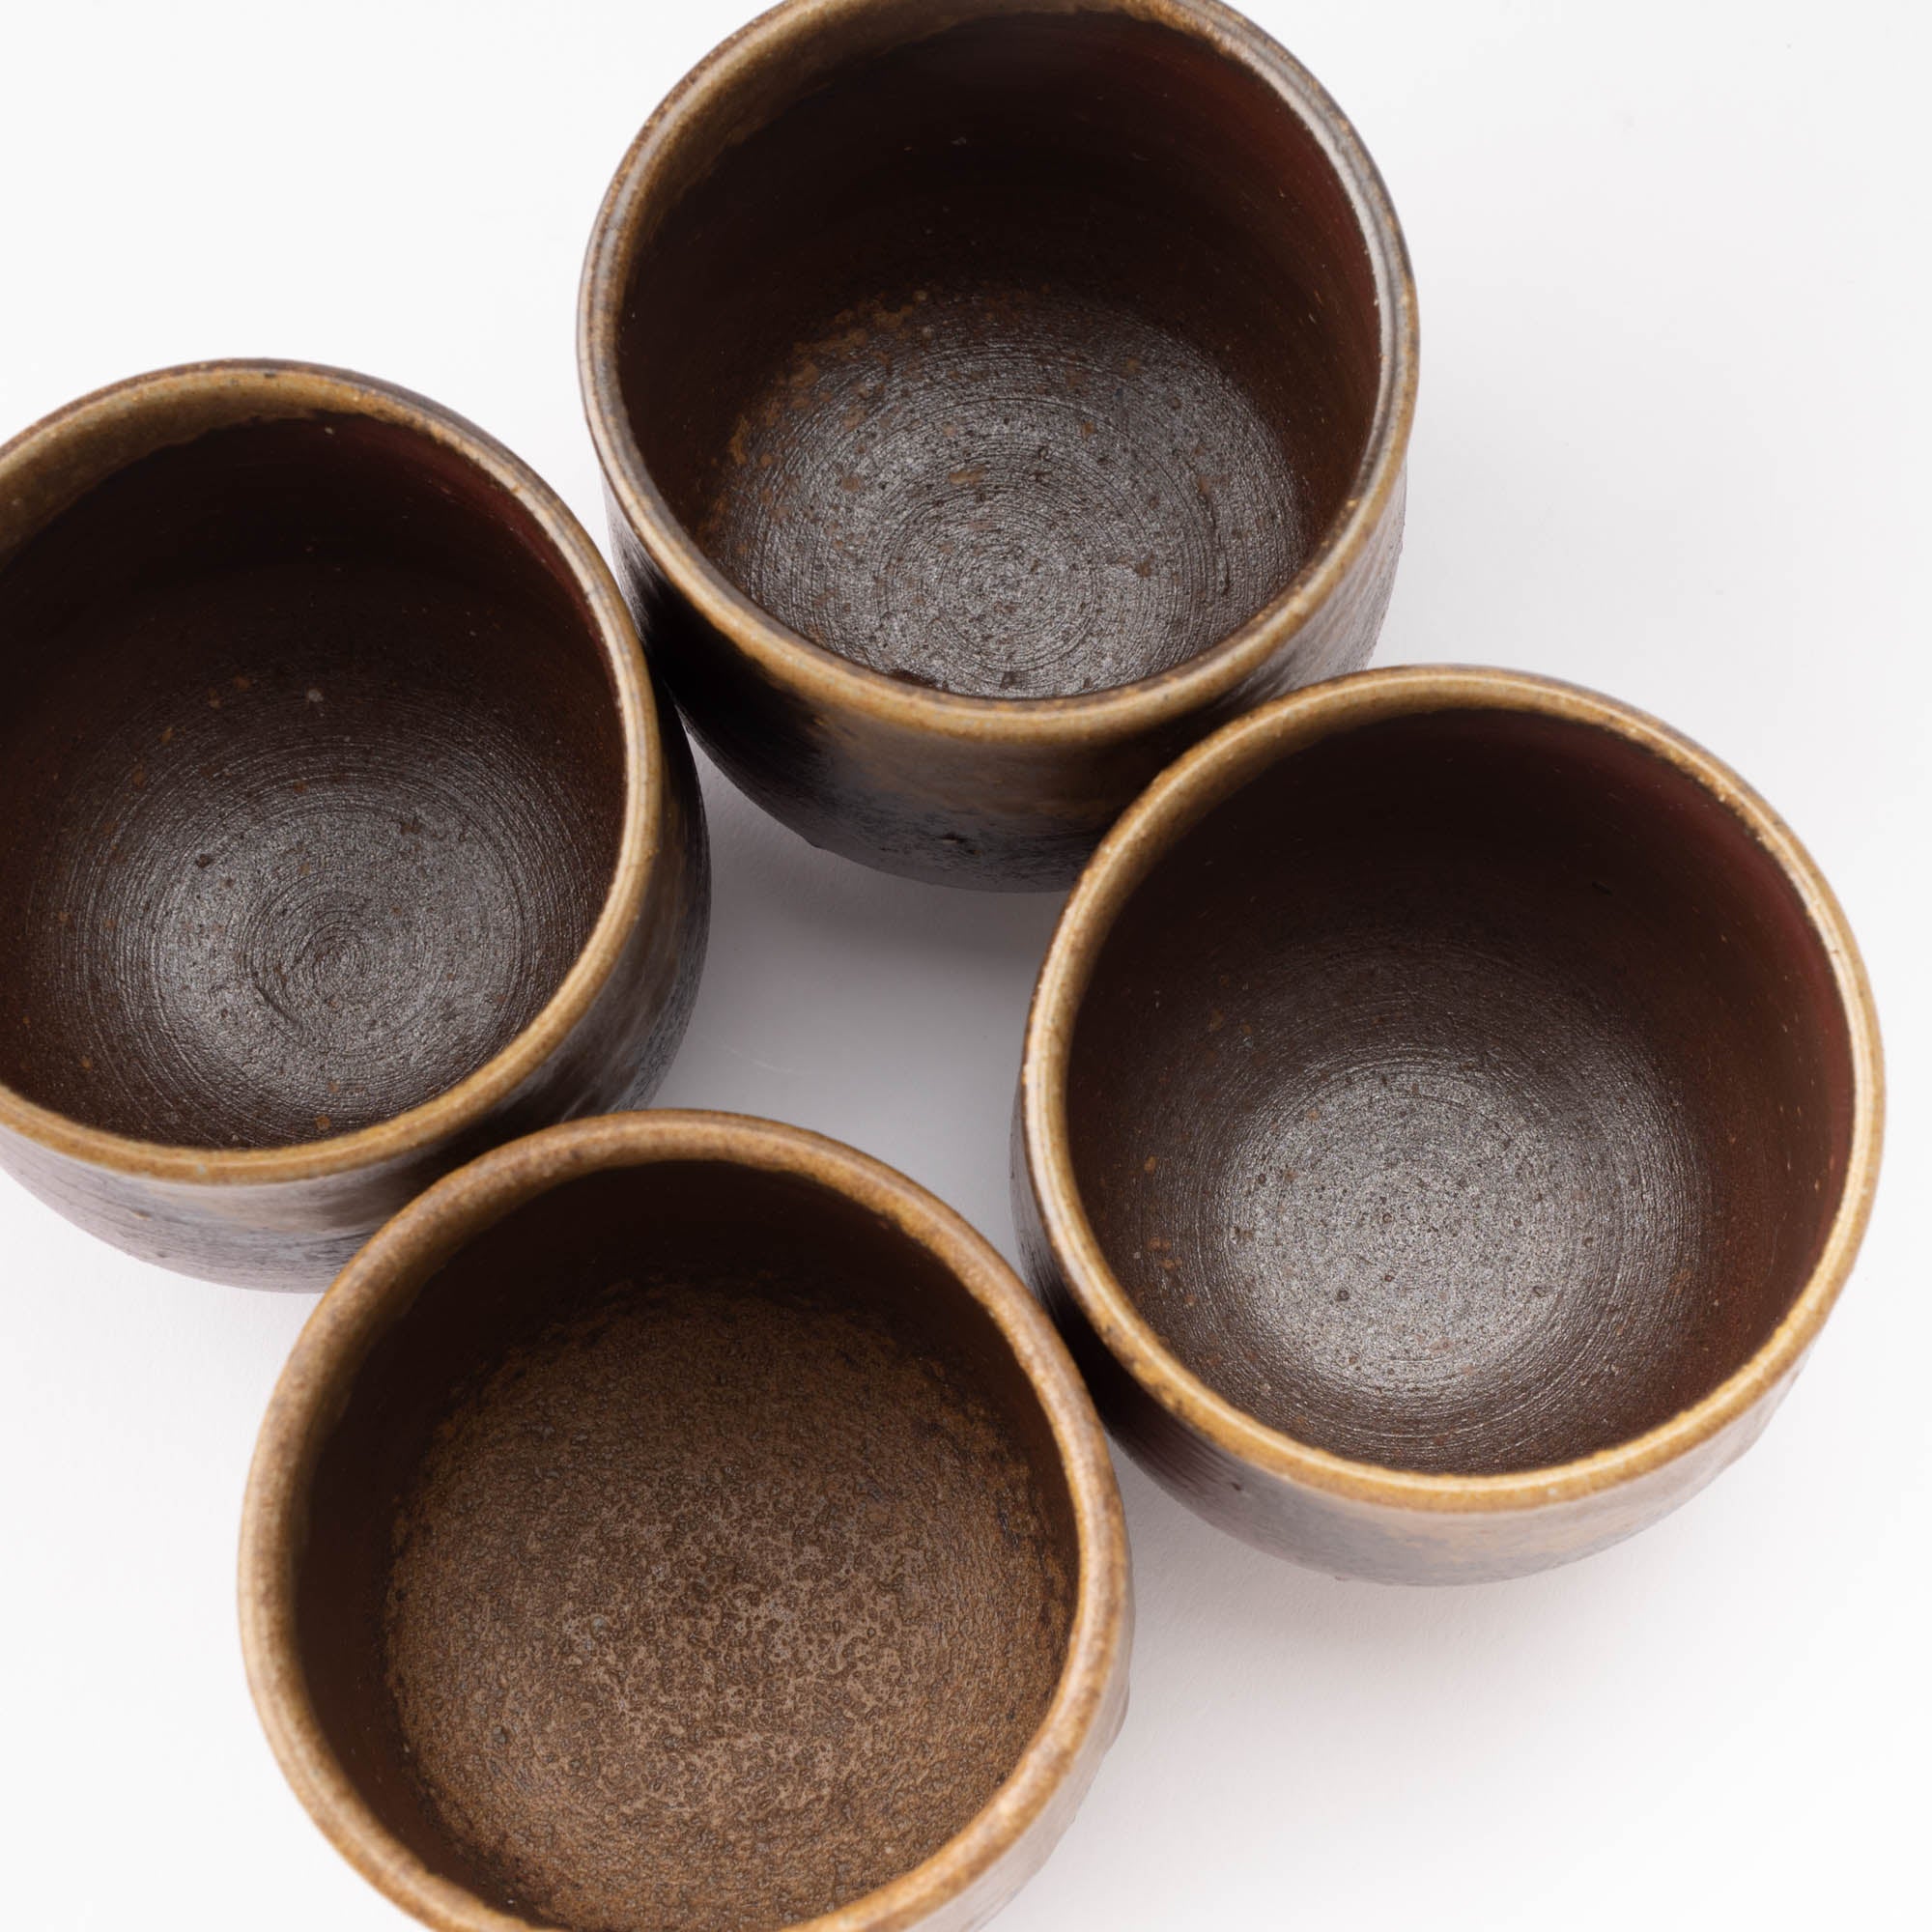 Hozan Kiln Goma Bizen Ware Japanese Teacup - MUSUBI KILN - Handmade Japanese Tableware and Japanese Dinnerware